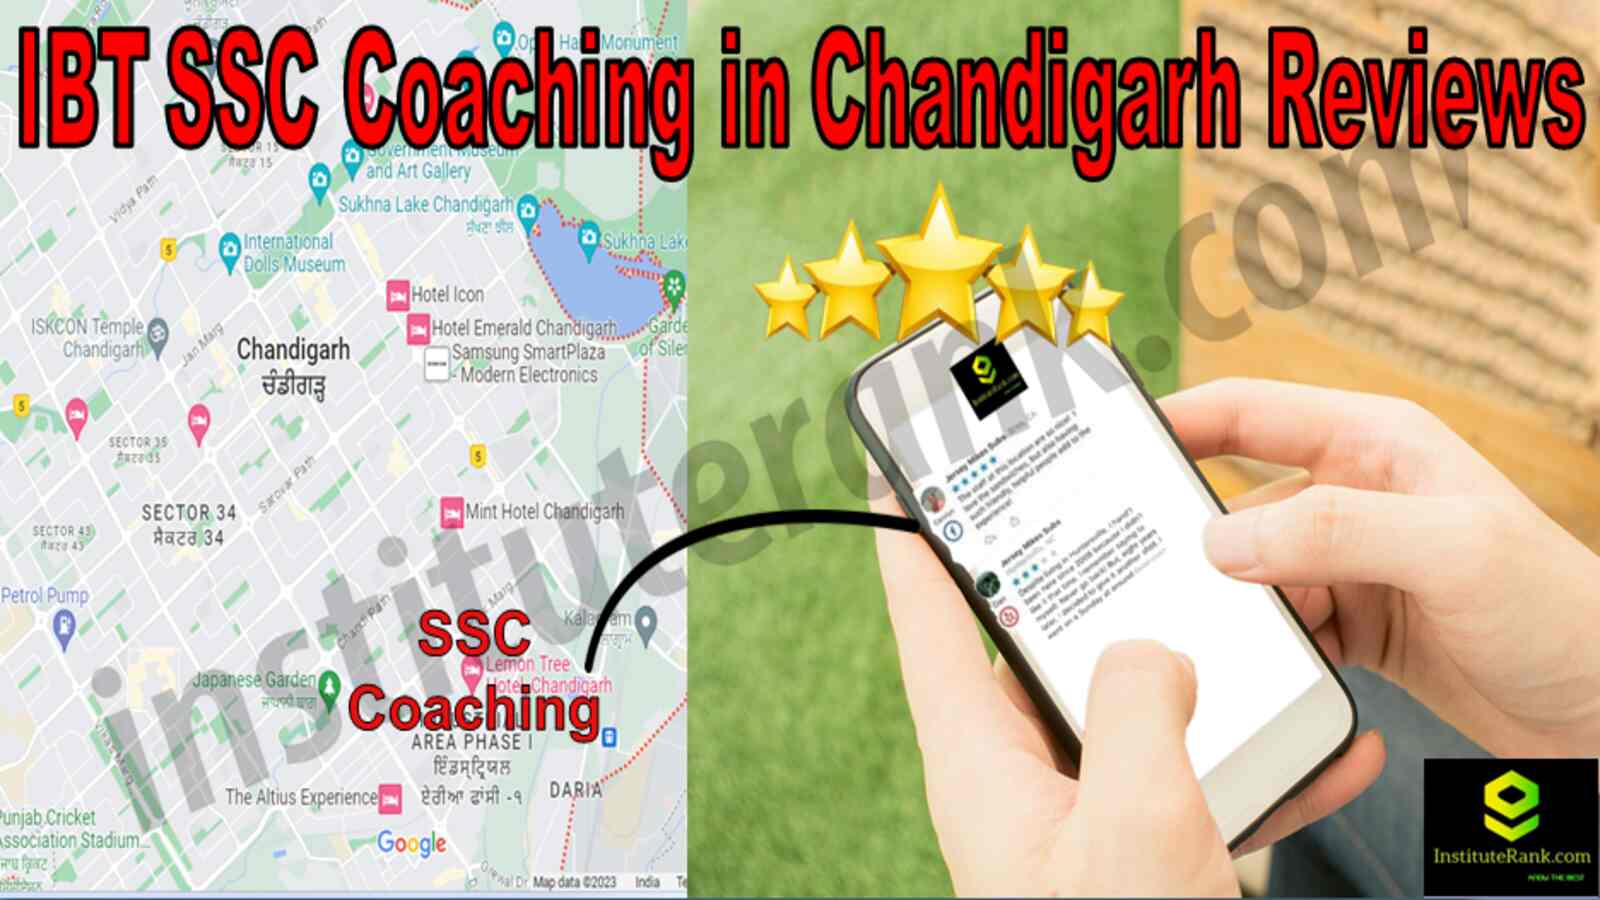  SSC Coaching in Chandigarh Reviews